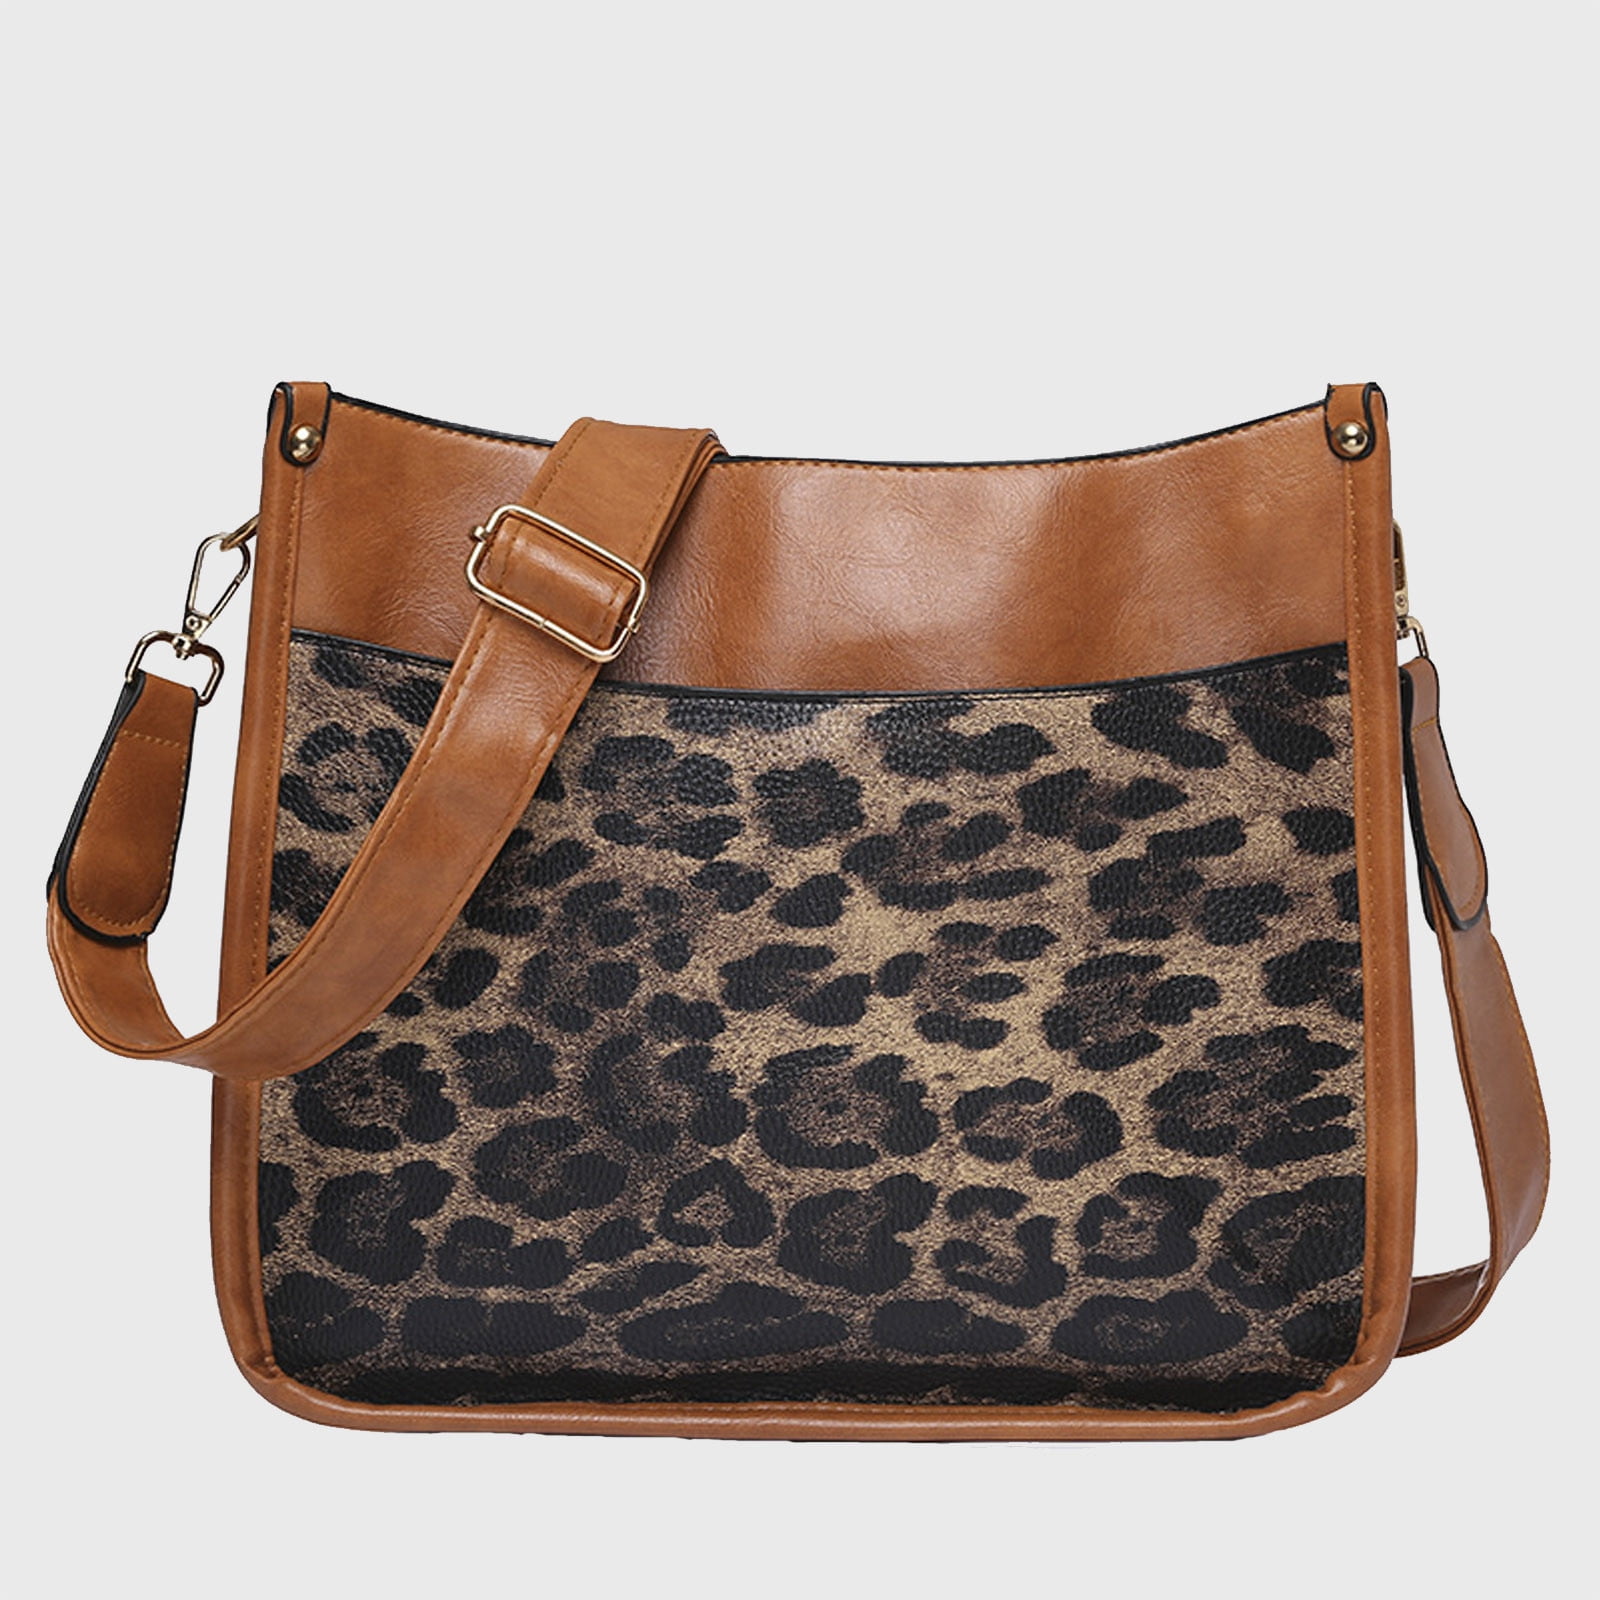 Leopobag Leopard Porvair - Bags from Moda in Pelle UK